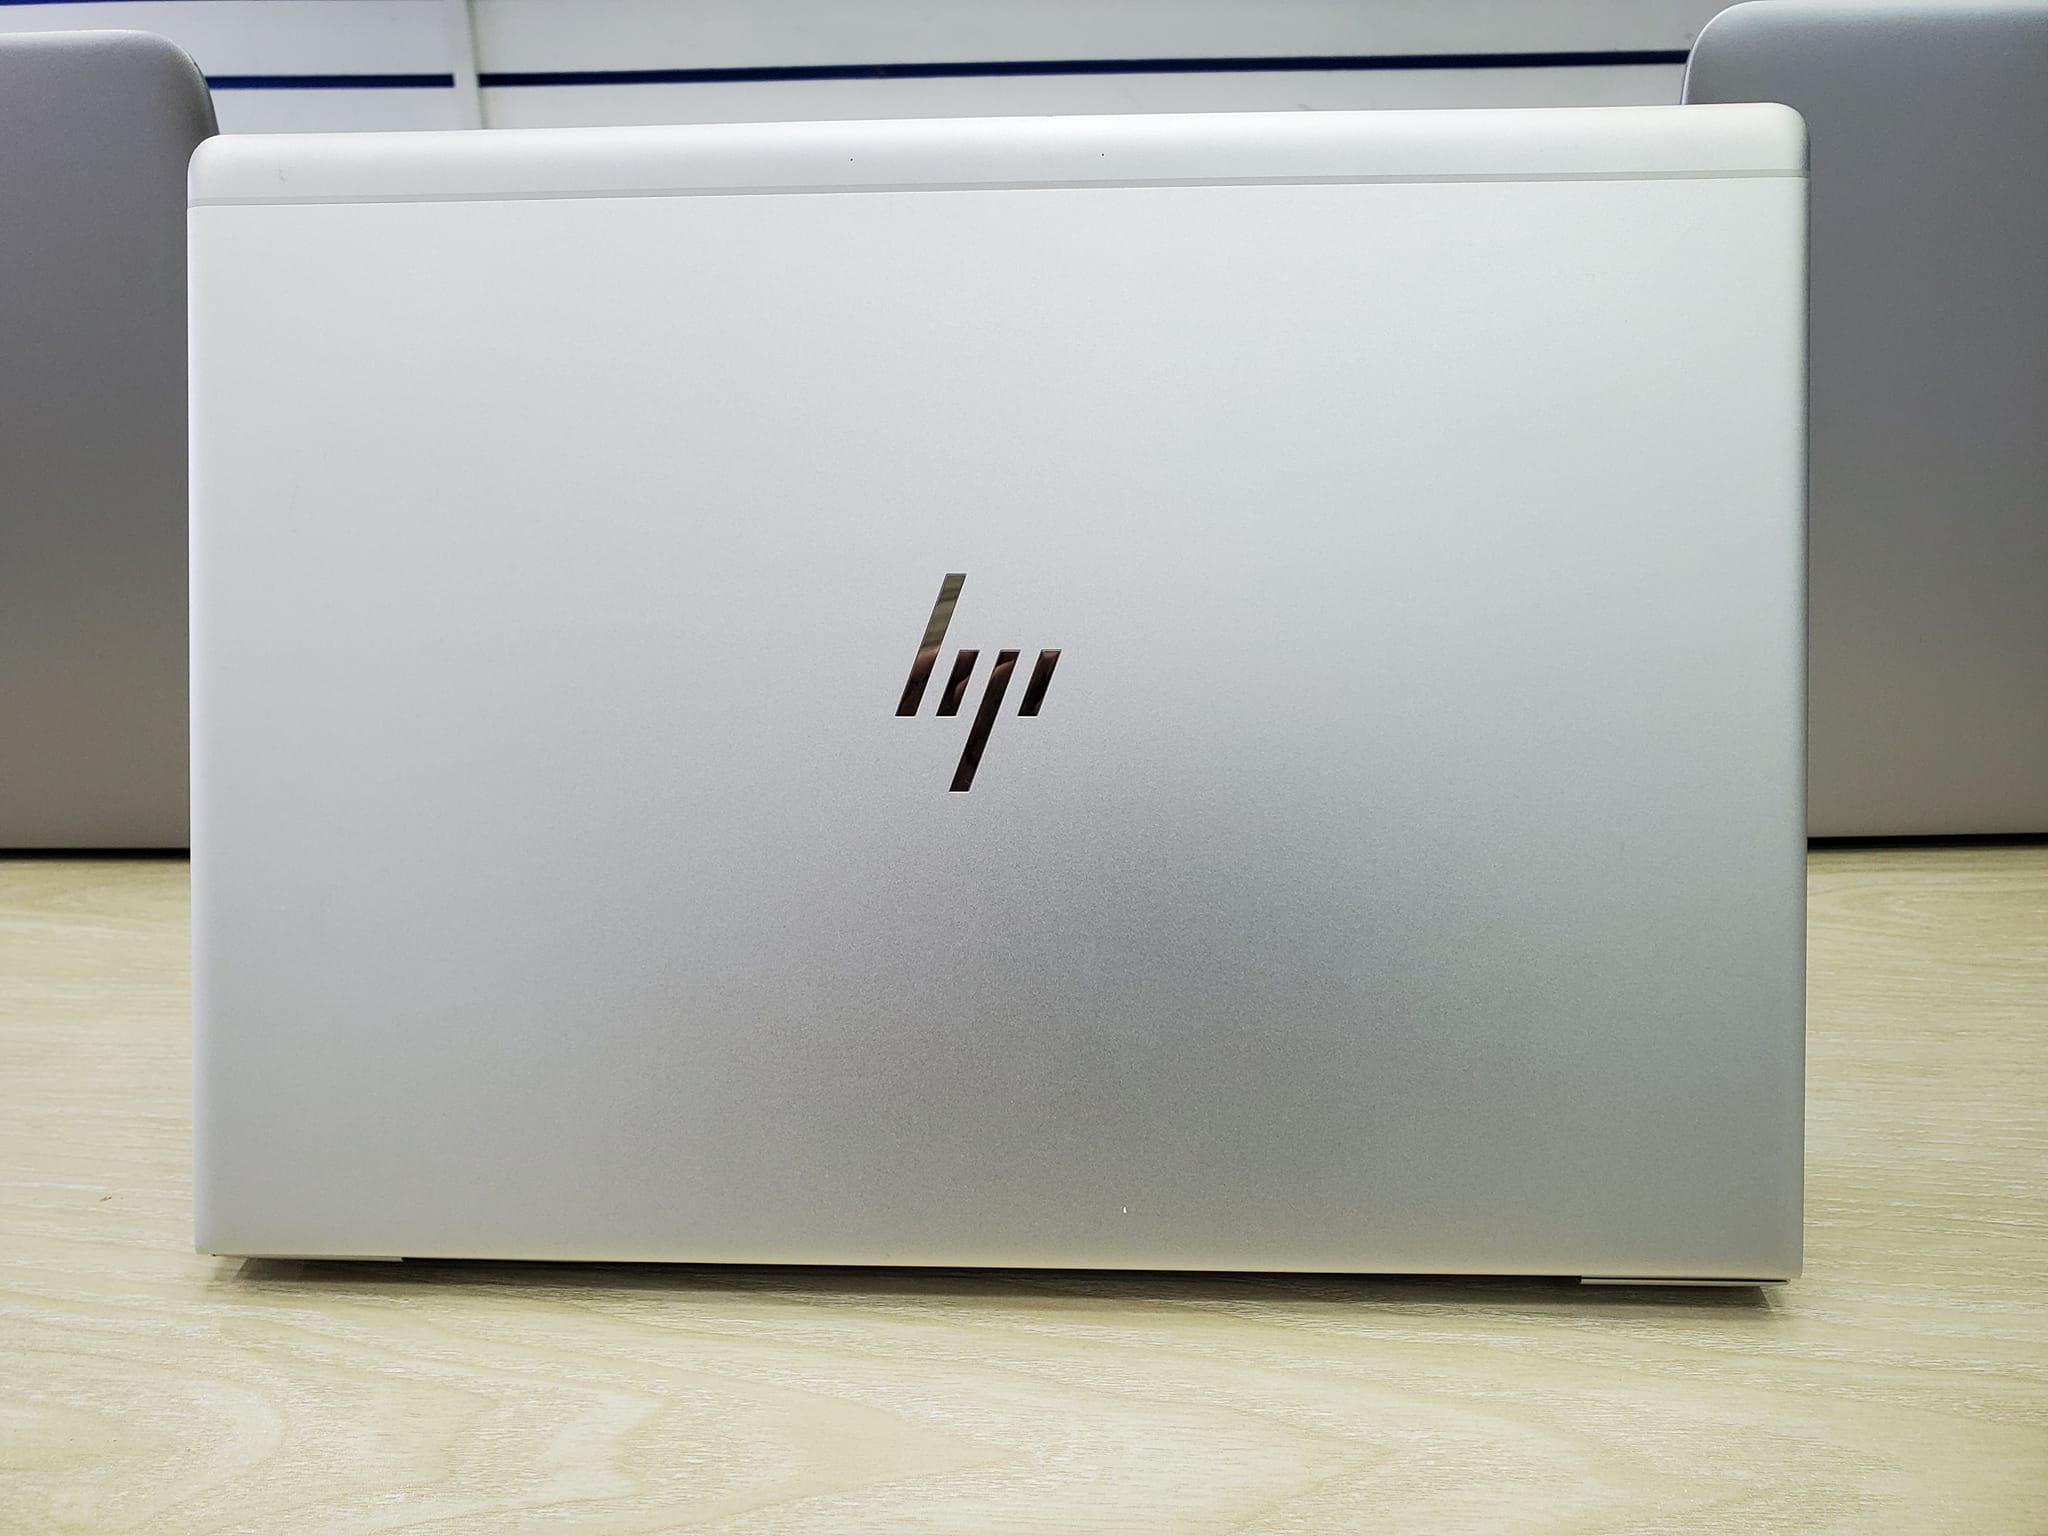 HP EliteBook 840 G5 - 8th Gen. Intel Core i5 - 256GB SSD - 8GB RAM